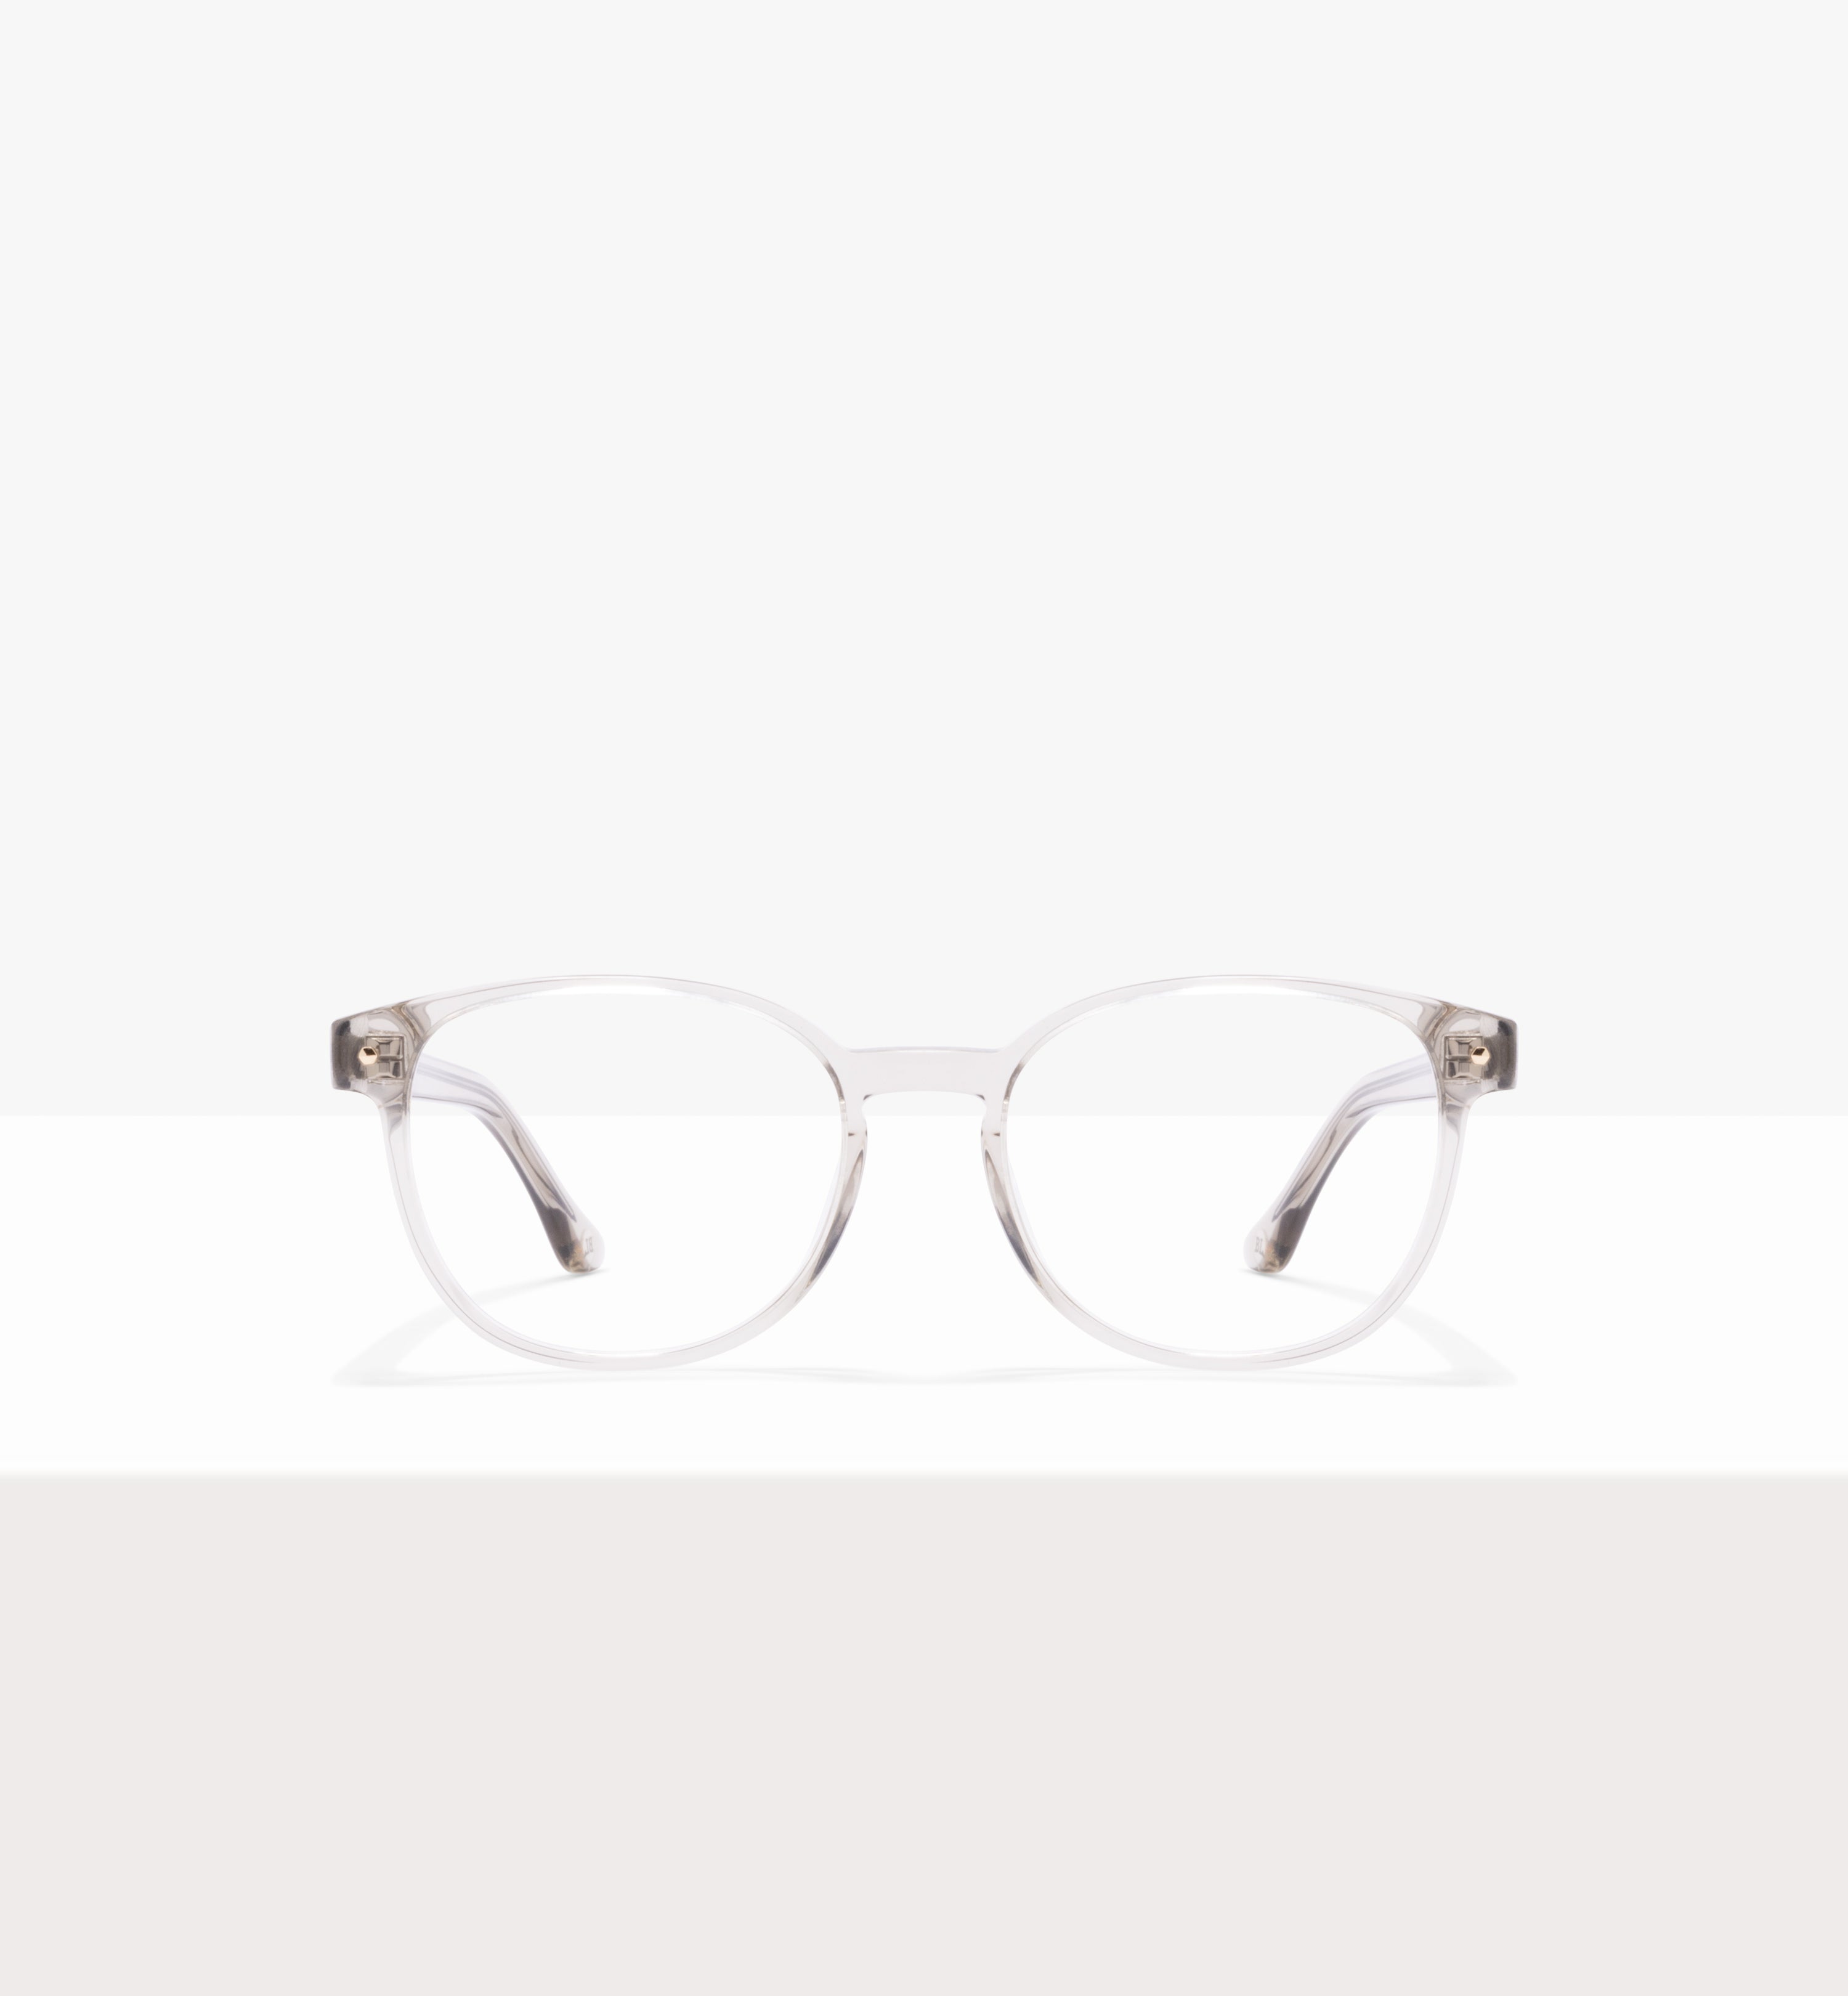 Lenskart.com® - Buy Eyeglasses, Sunglasses & Contact Lens